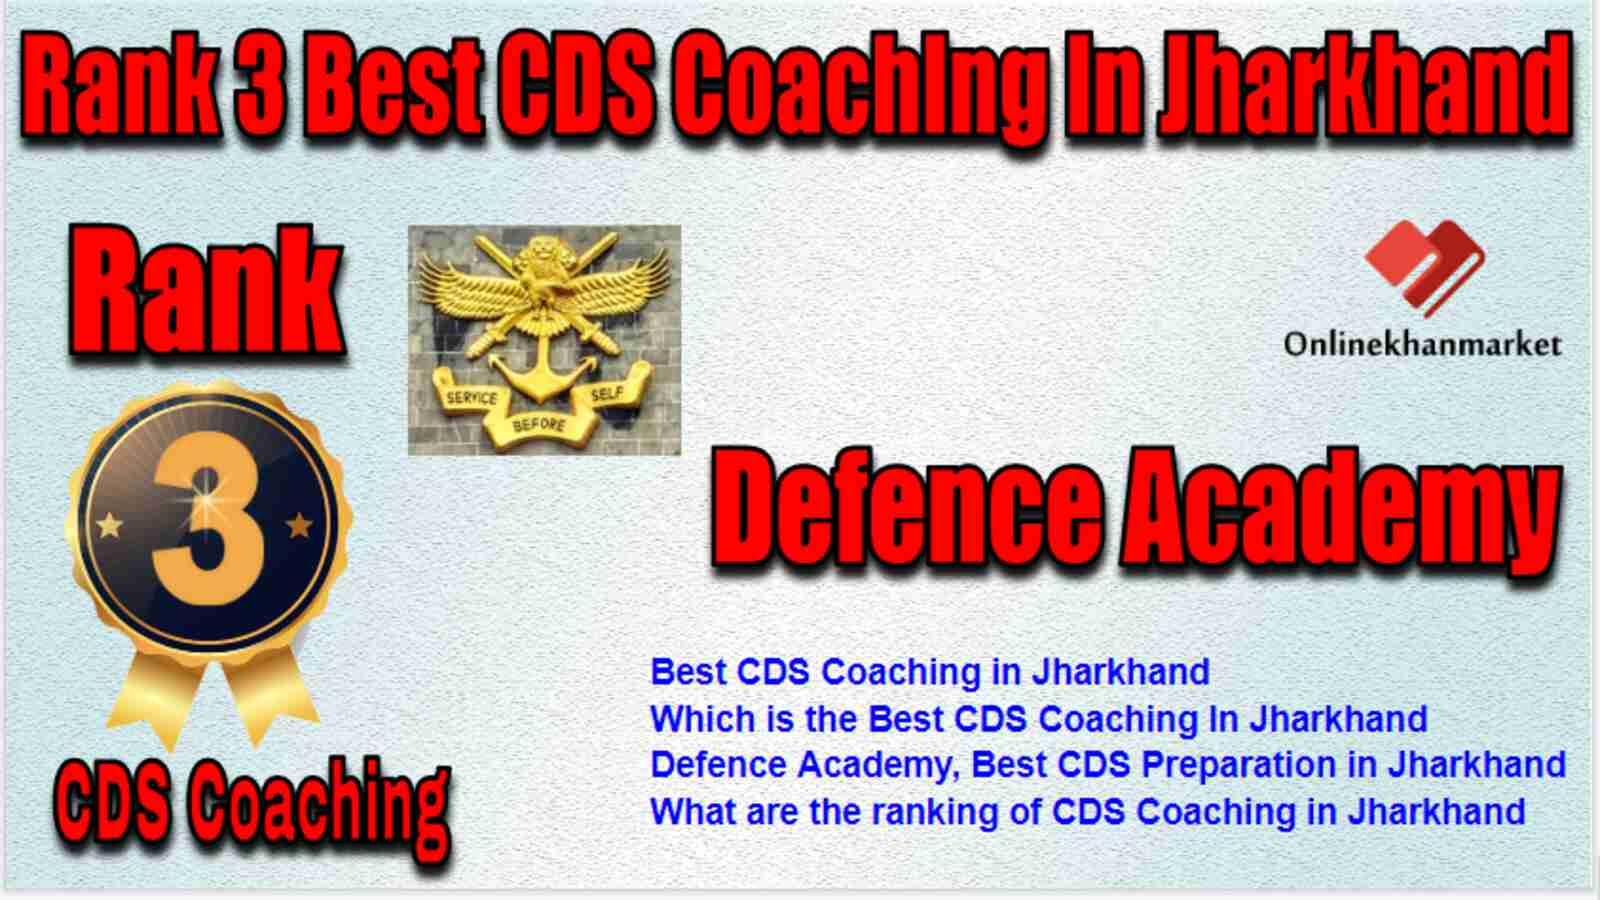 Rank 3 Best CDS Coaching in Jharkhand